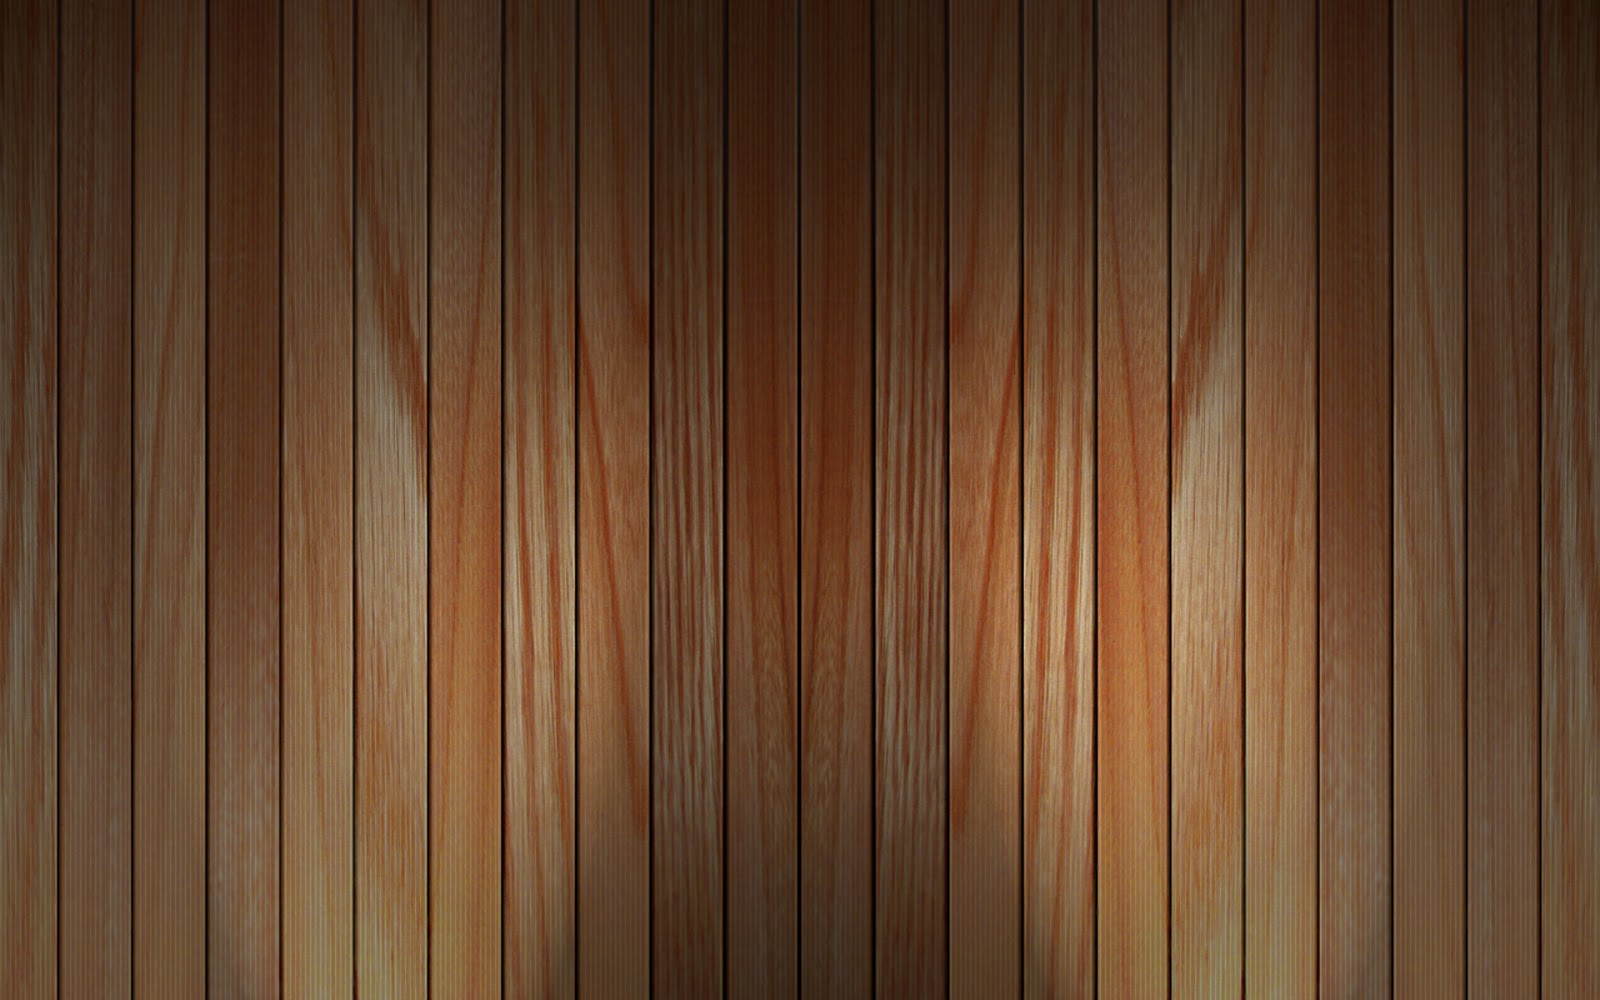 http://4.bp.blogspot.com/-c6UPAnJ6krs/TZiGKVf38WI/AAAAAAAAGSY/emsKJ2S1QBk/s1600/Houten-achtergronden-houten-wallpapers-hd-hout-wallpaper-afbeelding-3.jpg